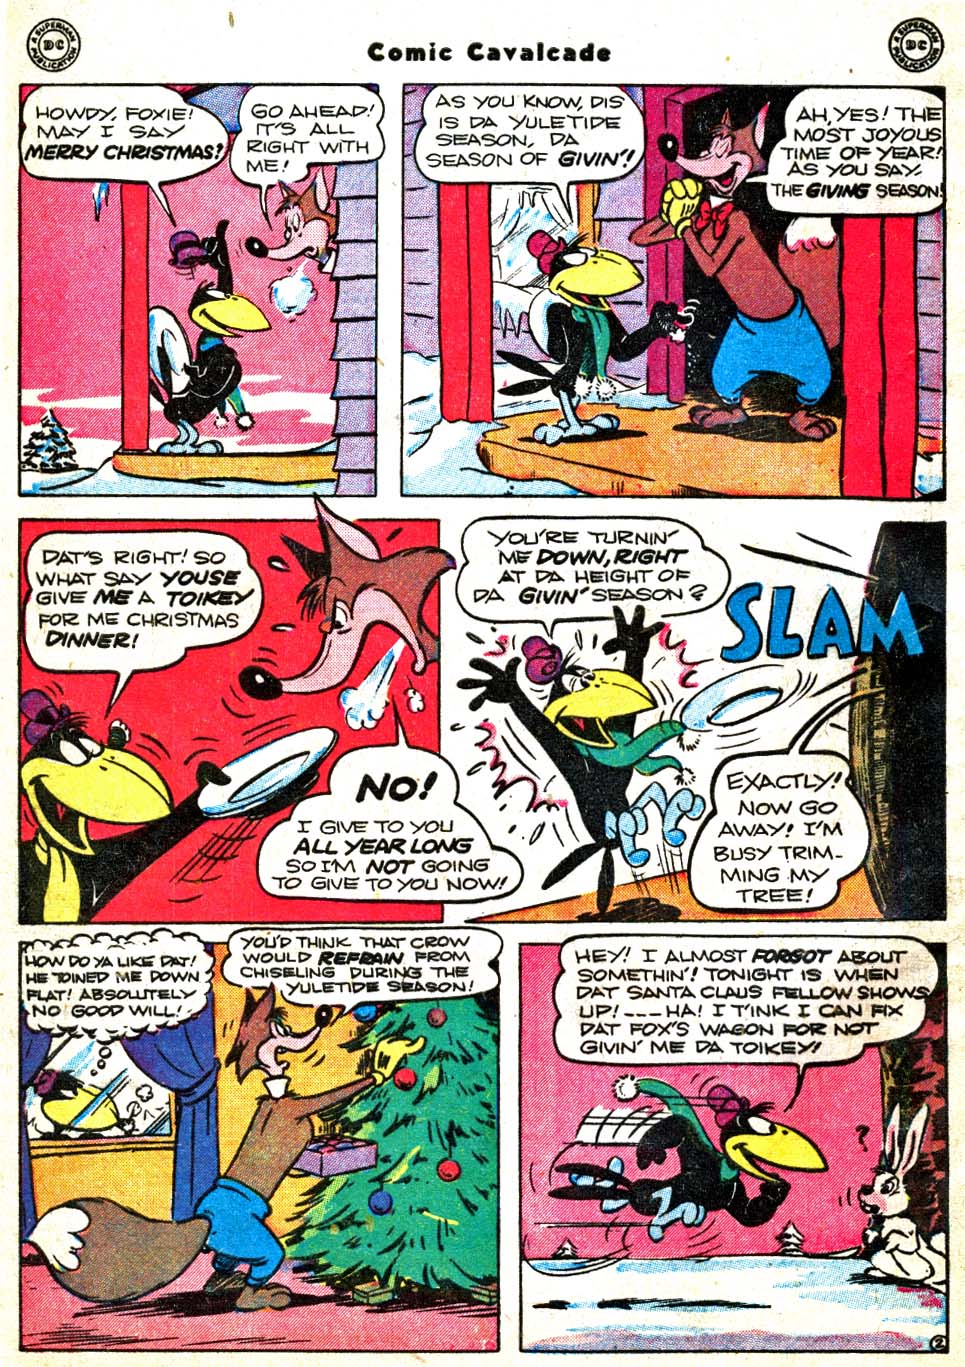 Comic Cavalcade issue 31 - Page 4